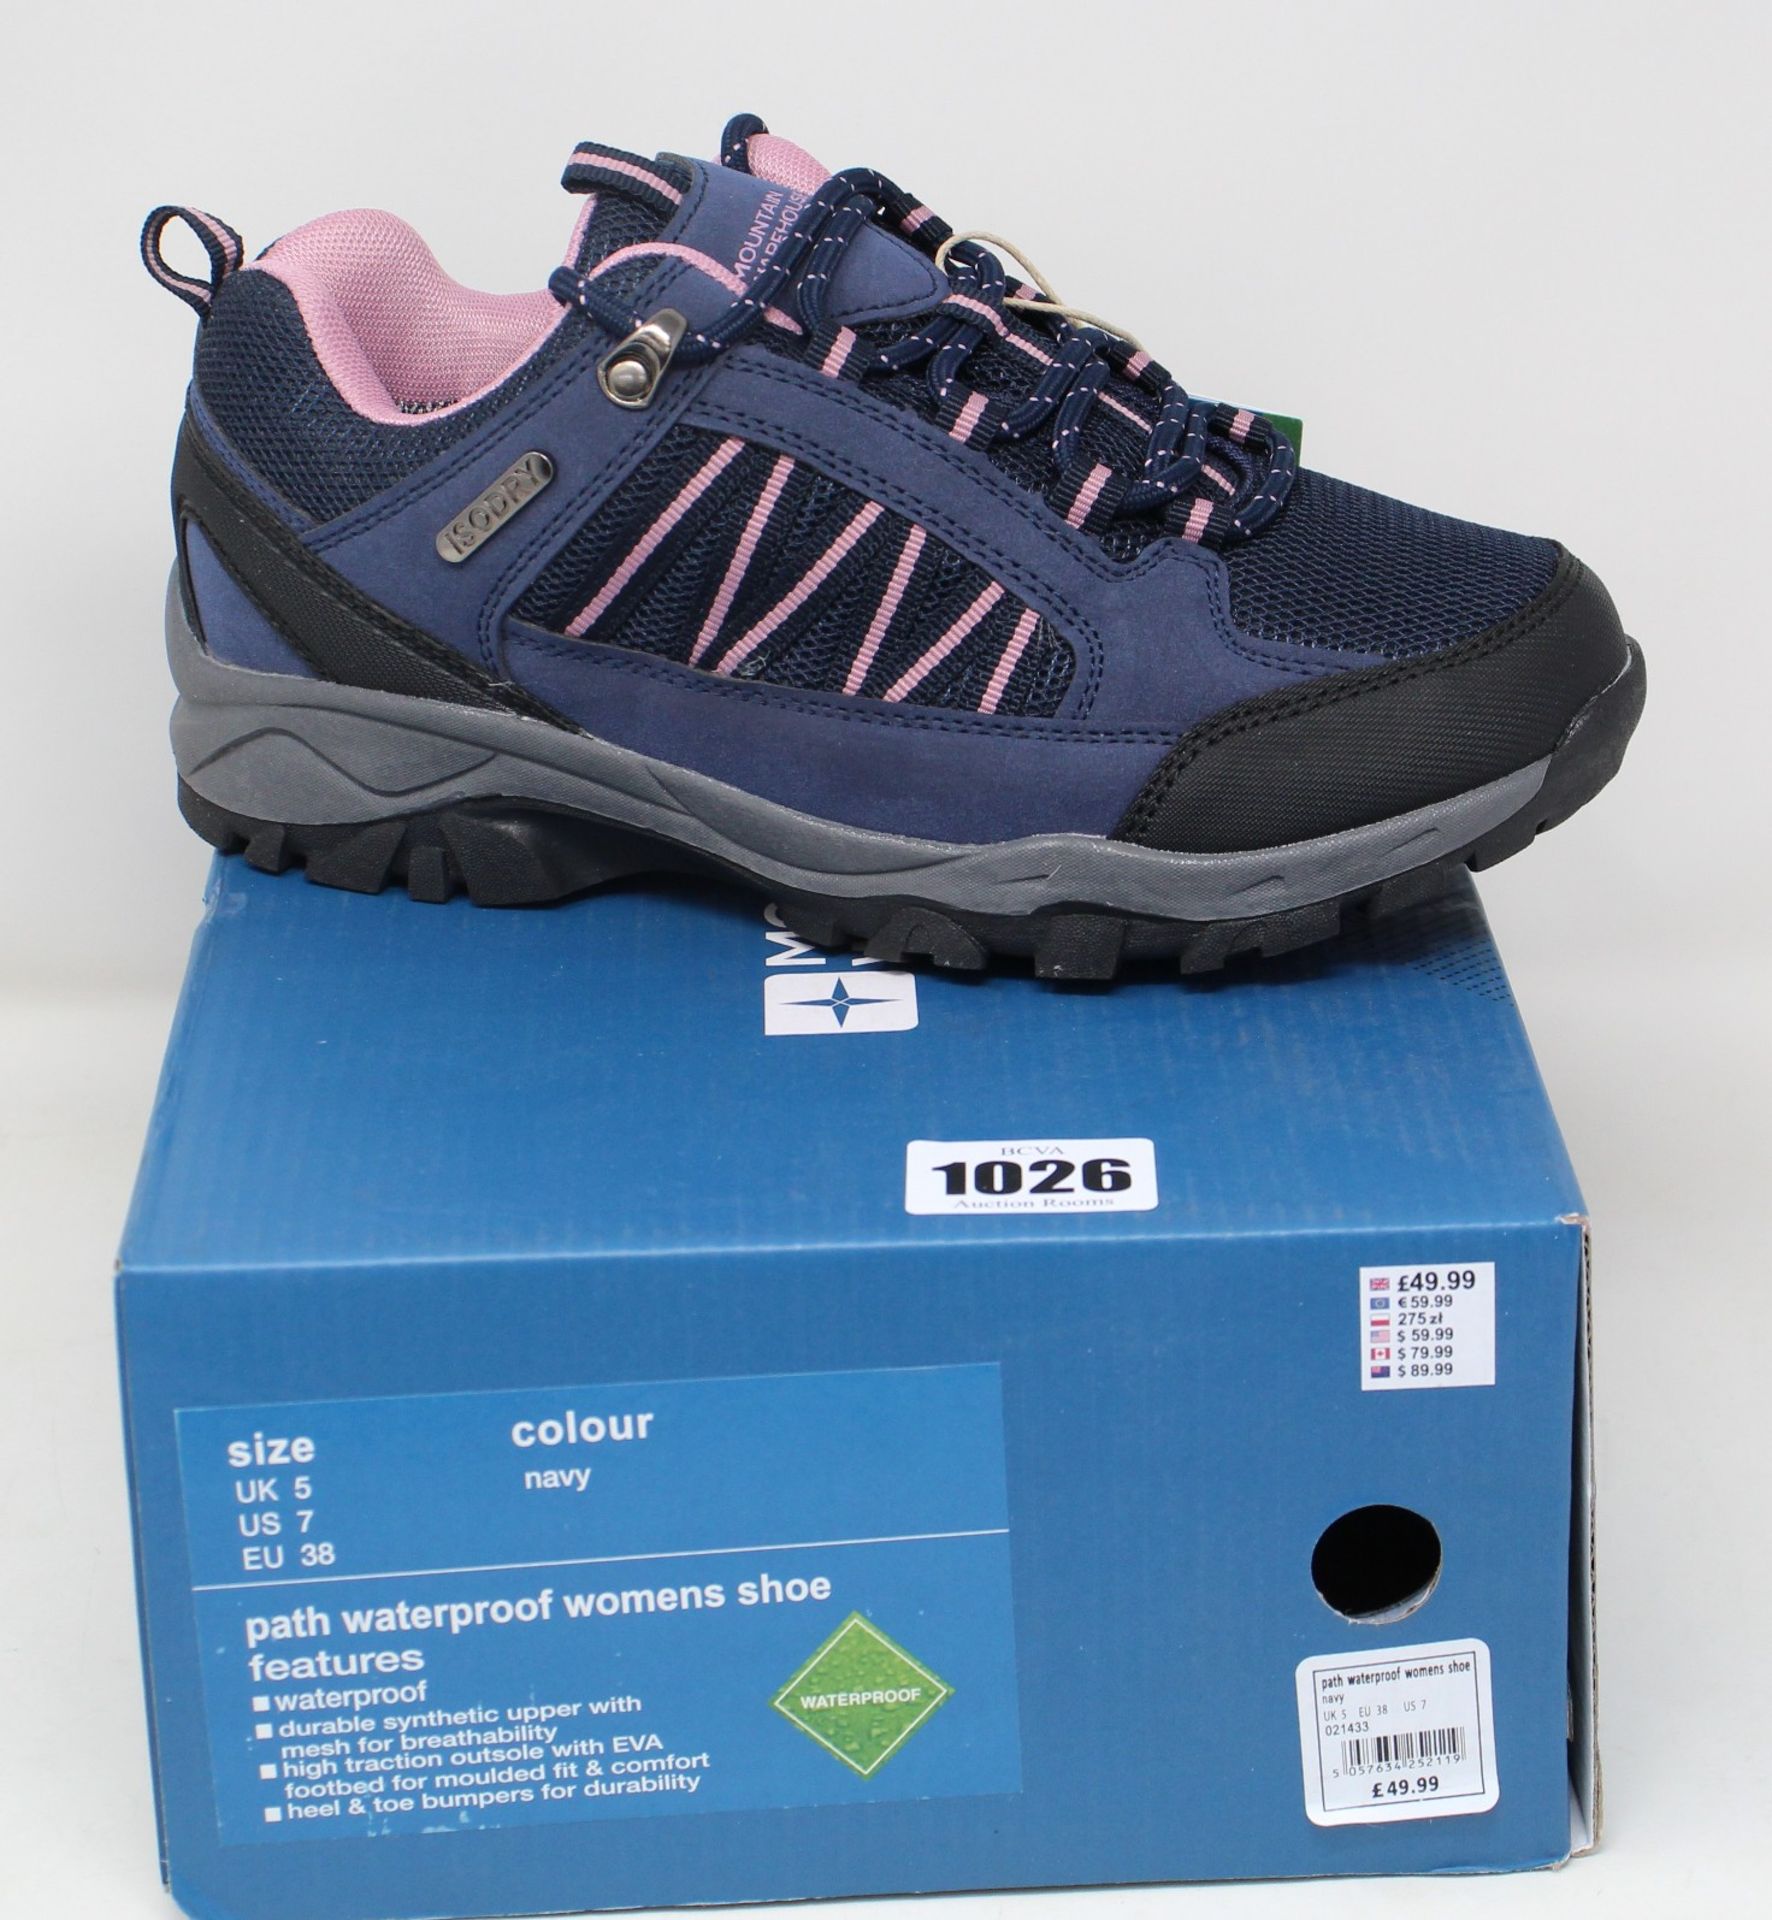 Four pairs of women's as new Mountain Warehouse Path waterproof shoes (2 x UK 5, 1 x UK 7, 1 x UK